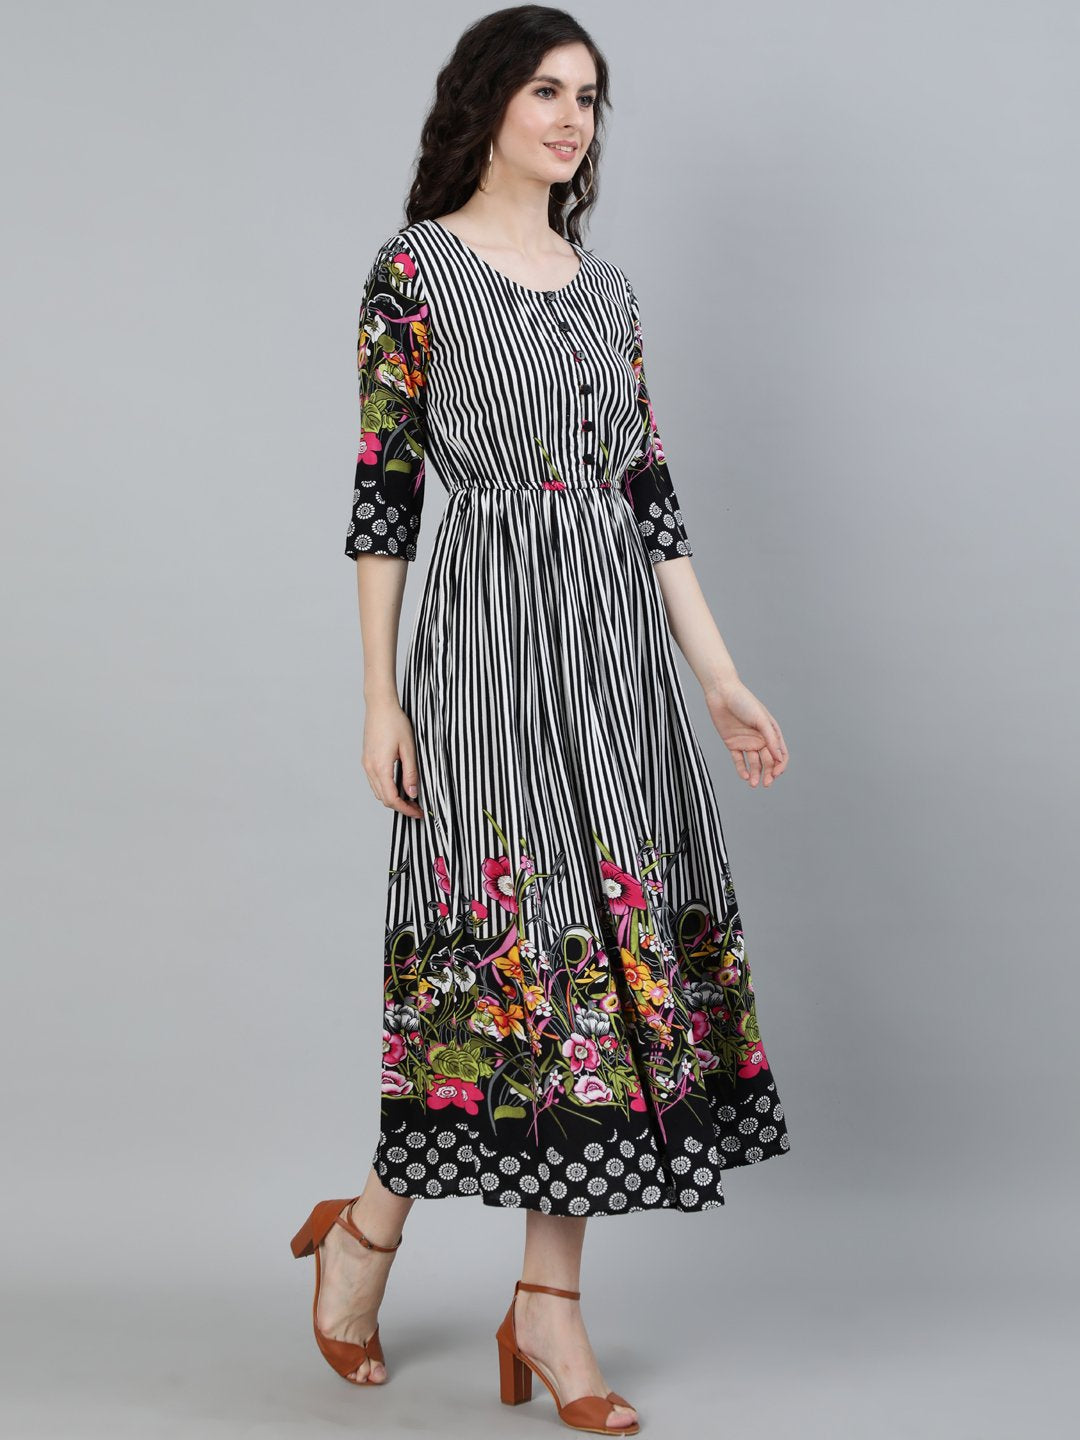 Ishin Women's Viscose Rayon Black & White Striped Dress